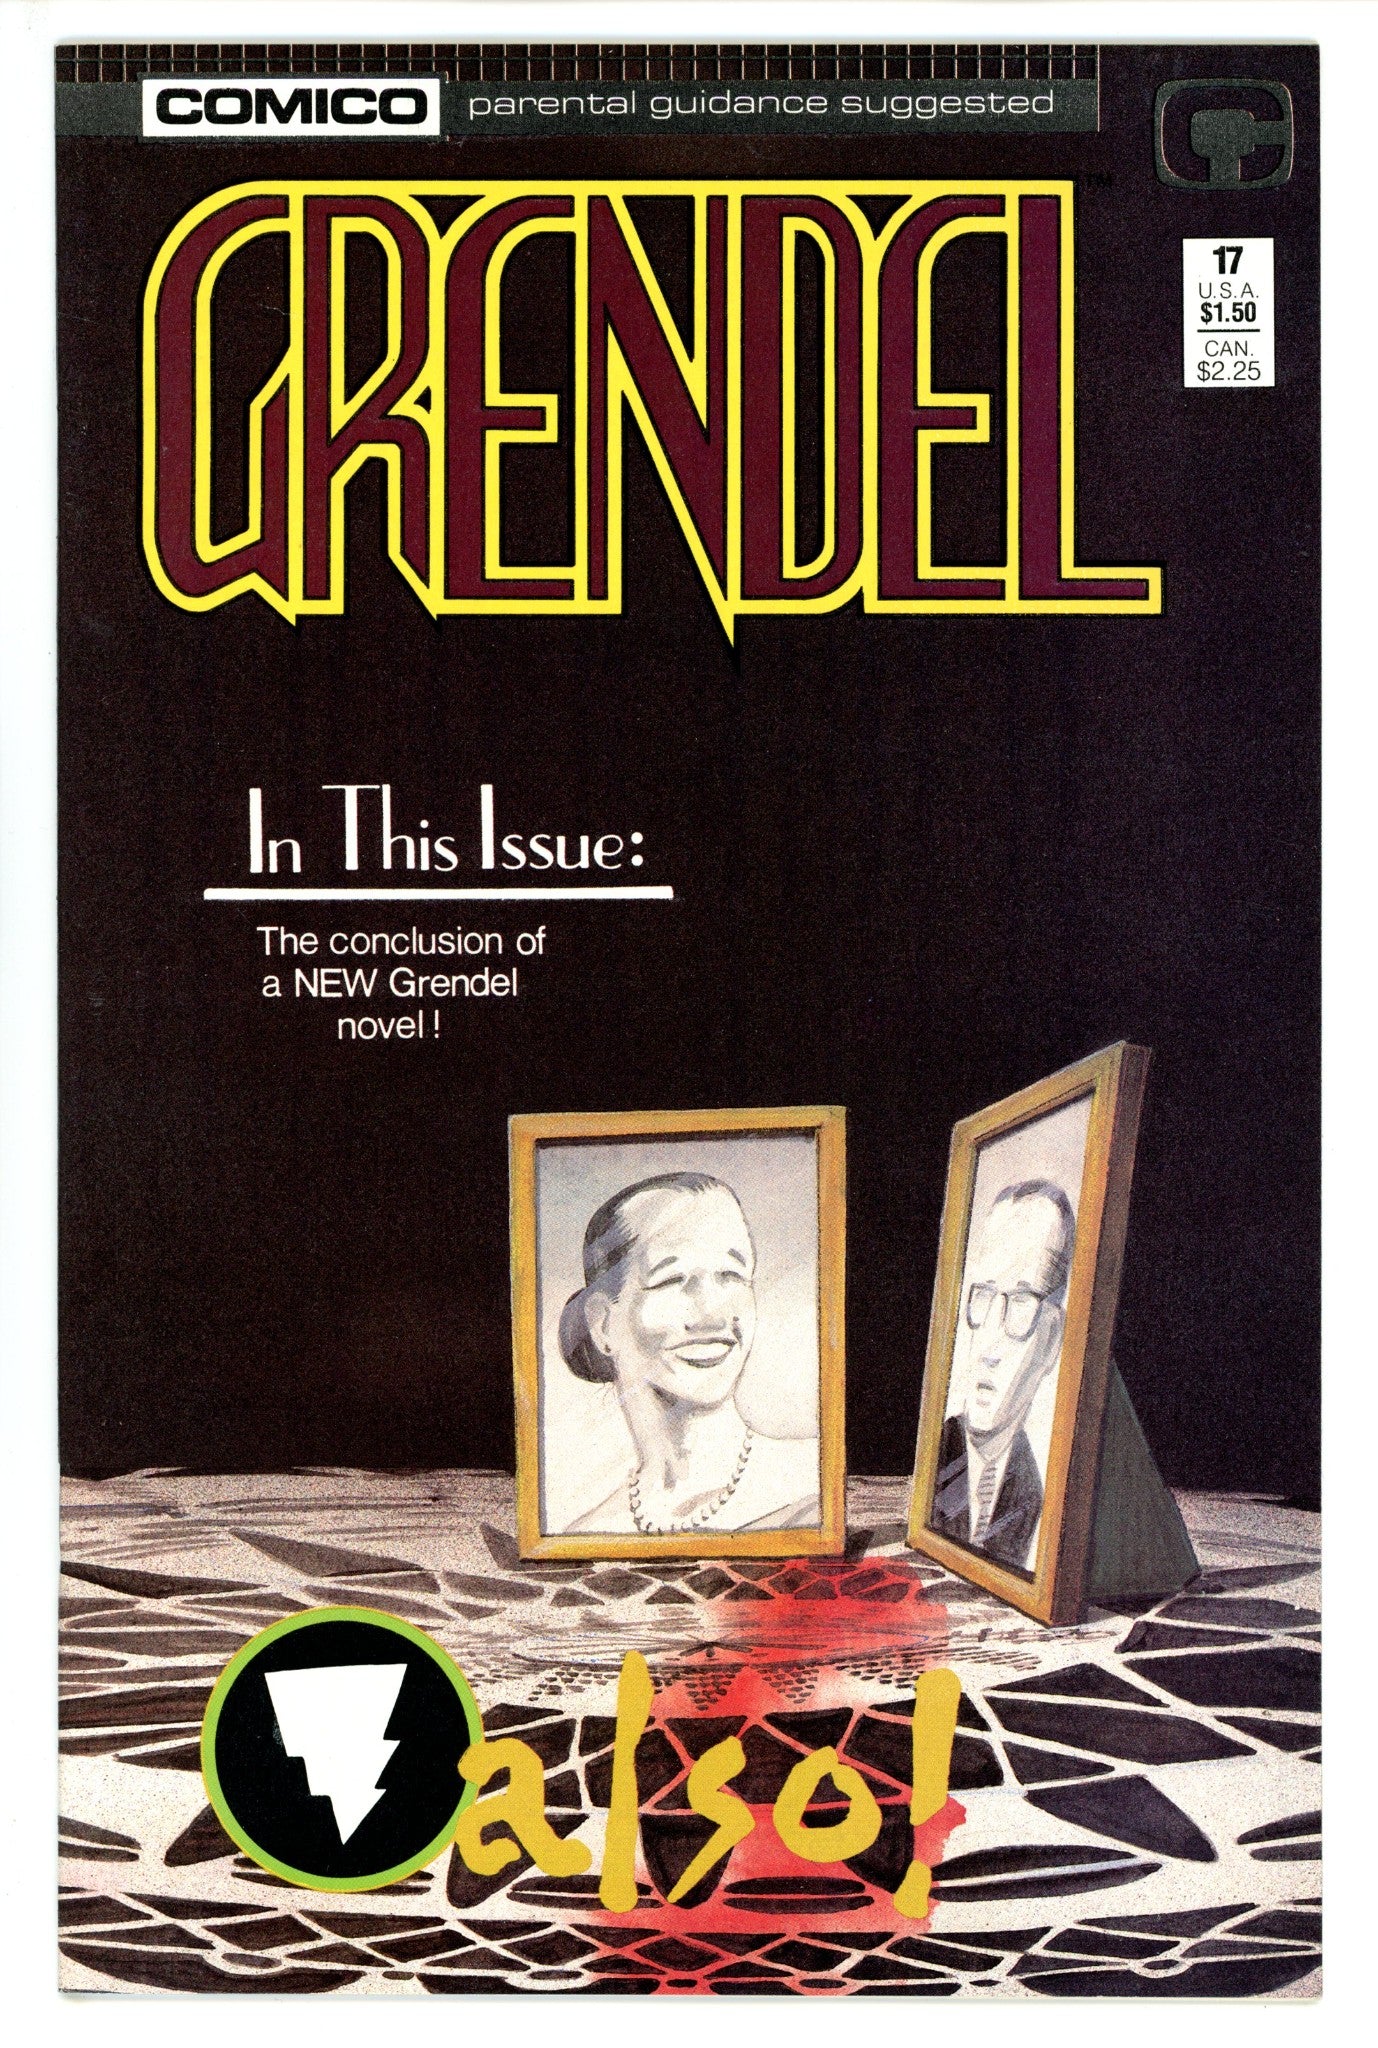 Grendel Vol 2 17 (1988)